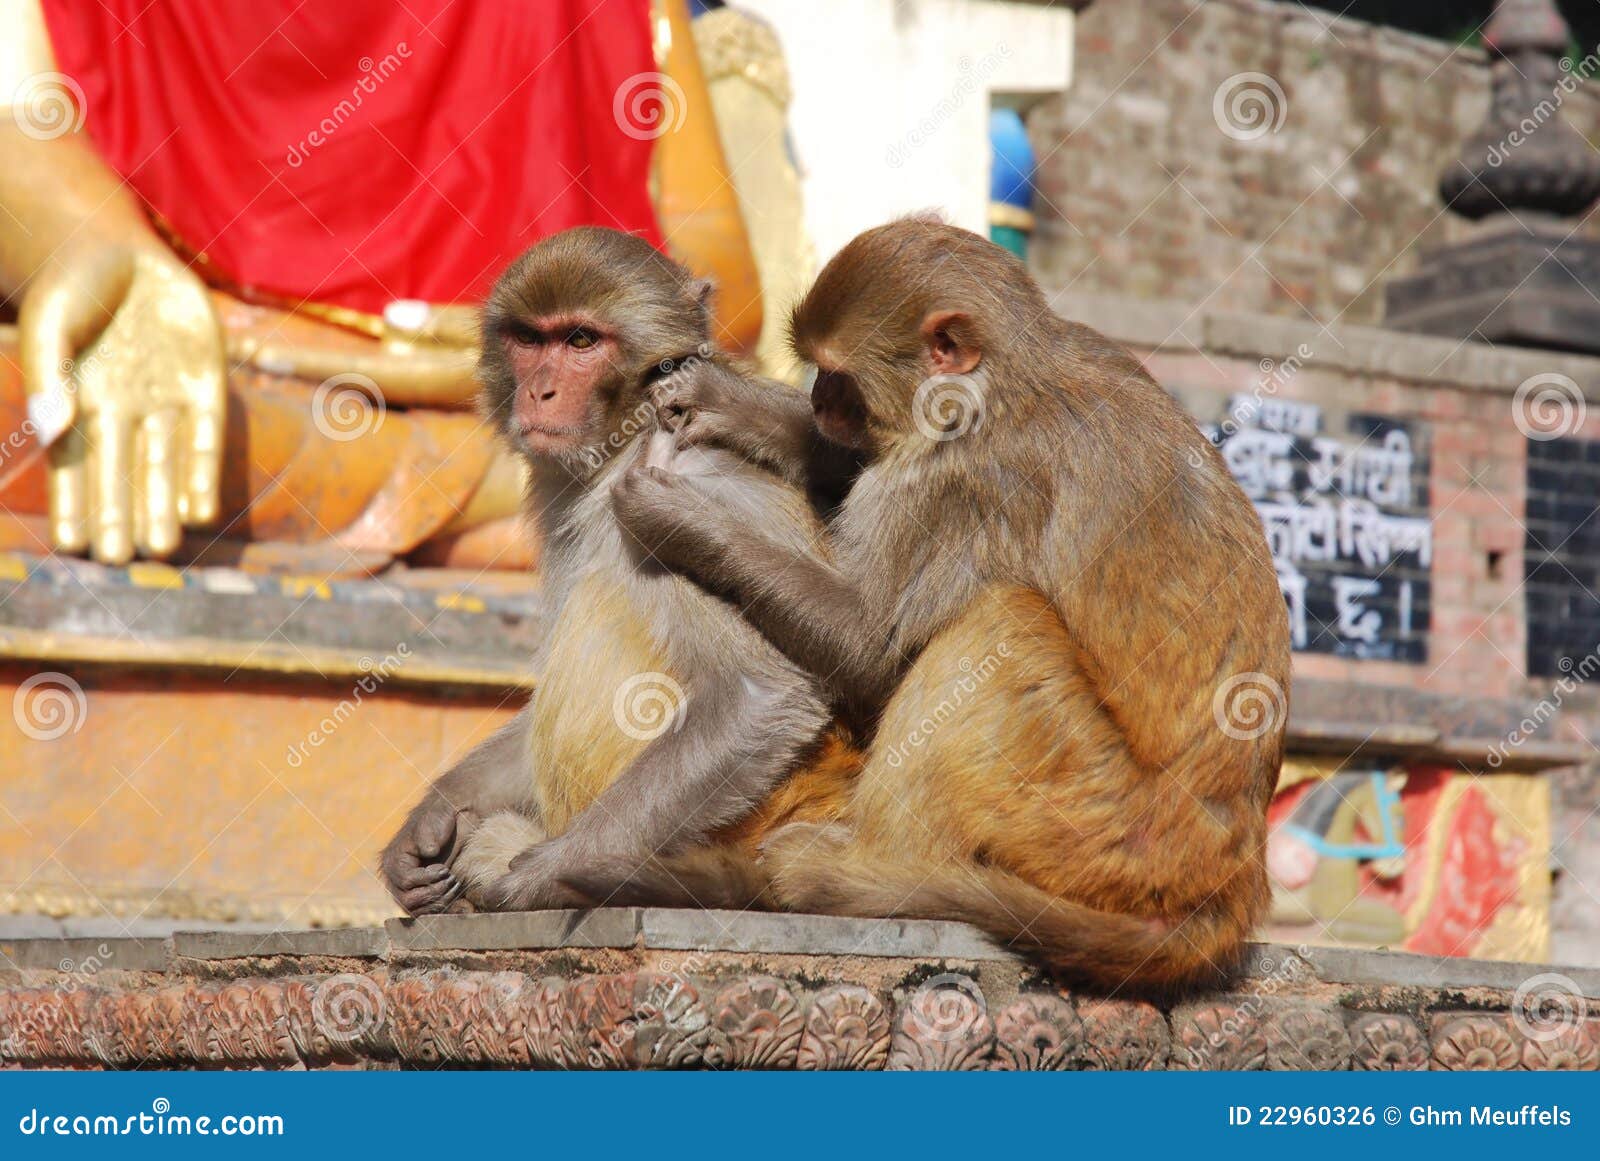 macaques apes - monkey temple - kathmandu - nepal